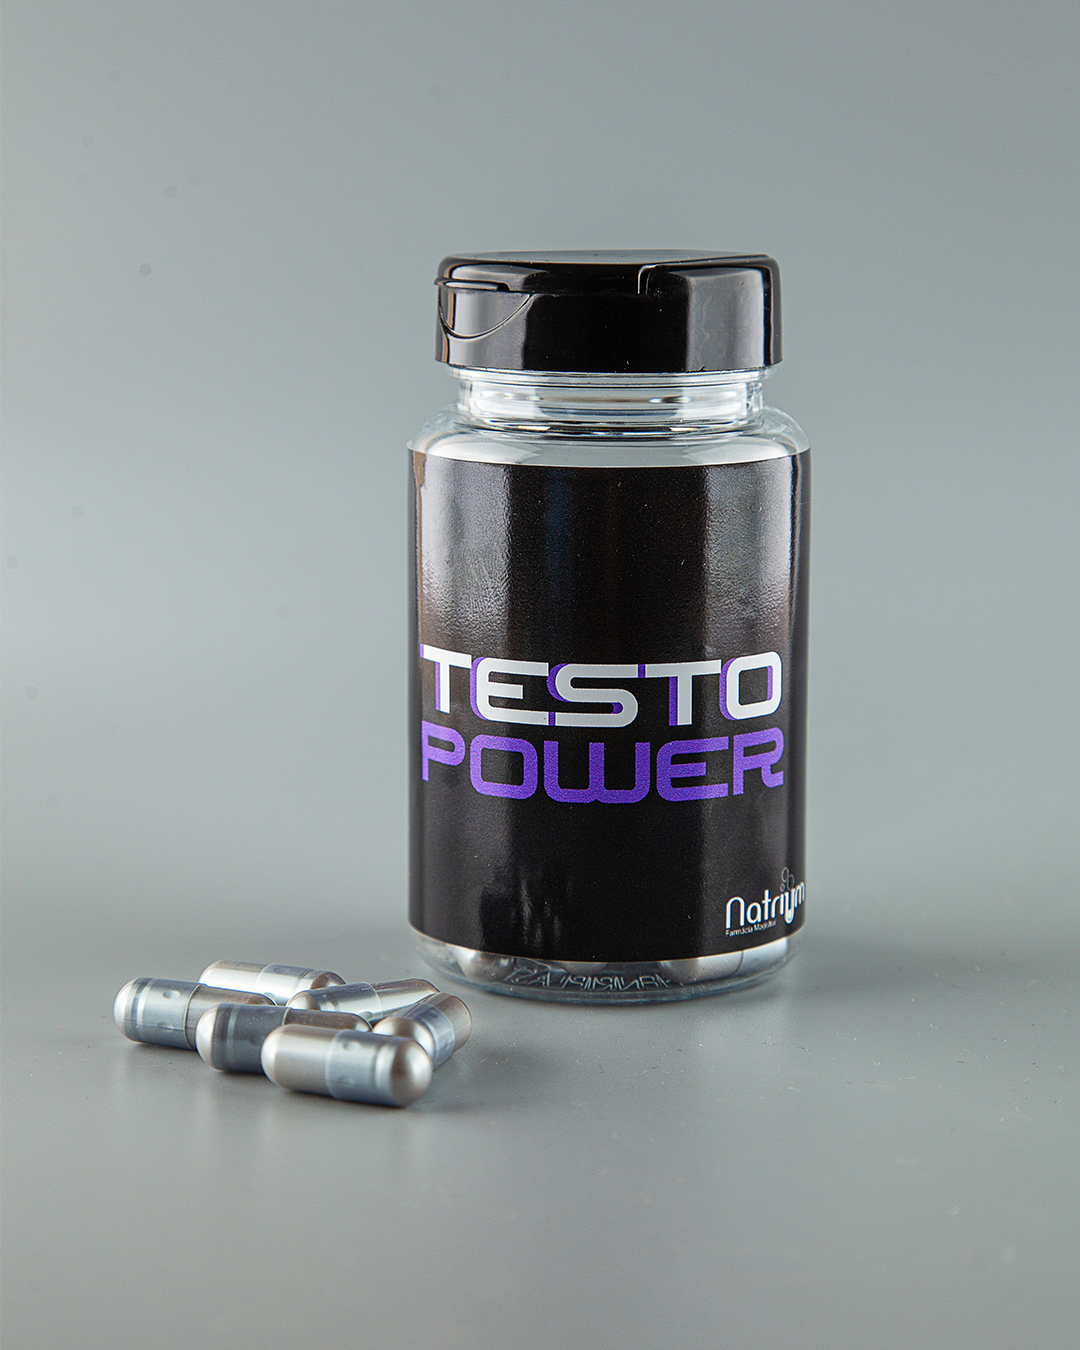 TestoPower - Pré -Treino c/90 capsulas - Natrium